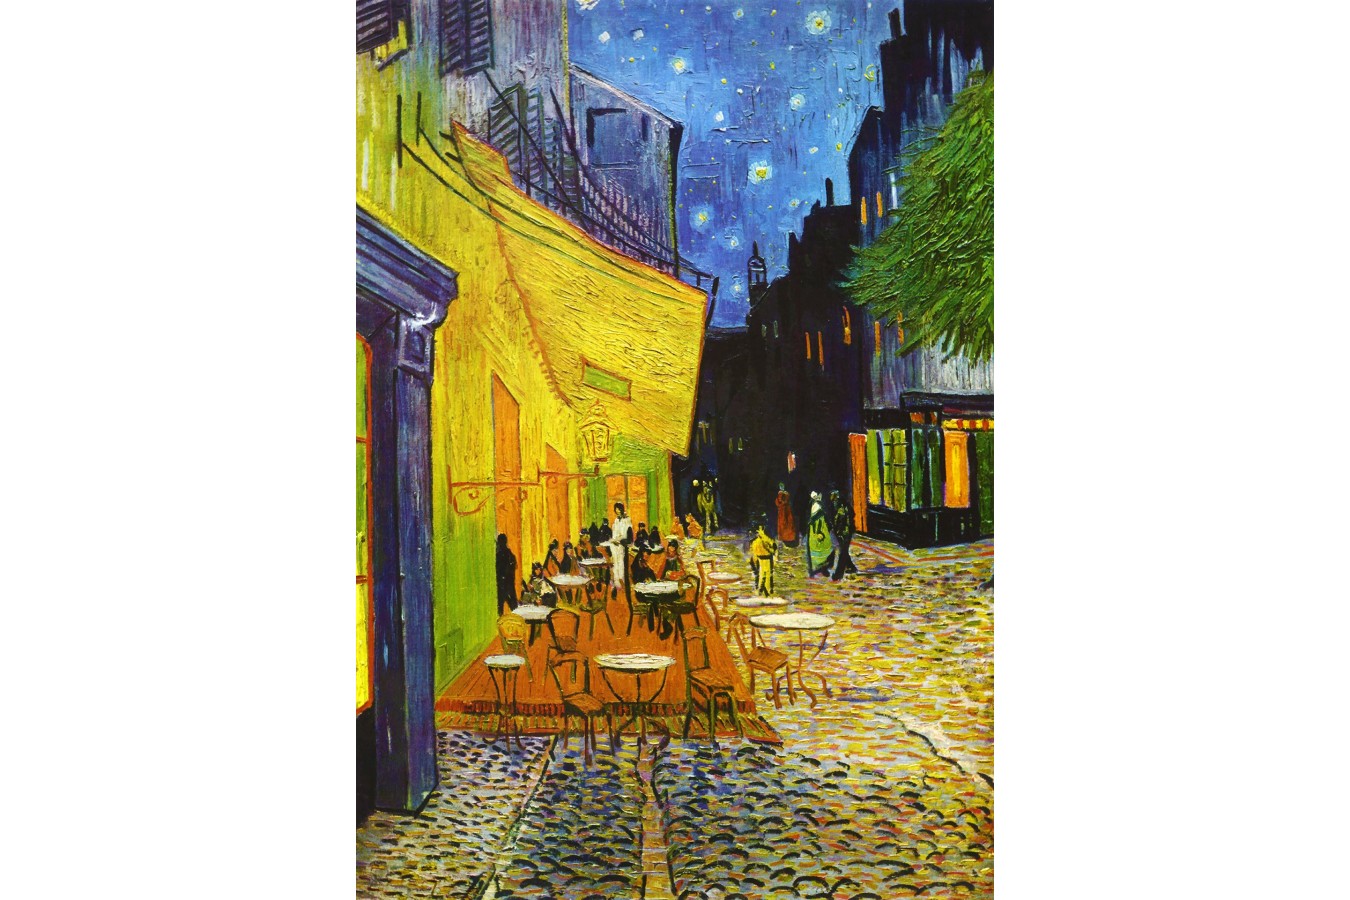 Puzzle 1000 piese Enjoy - Vincent Van Gogh: Cafe Terrace at Night (Enjoy-1101)